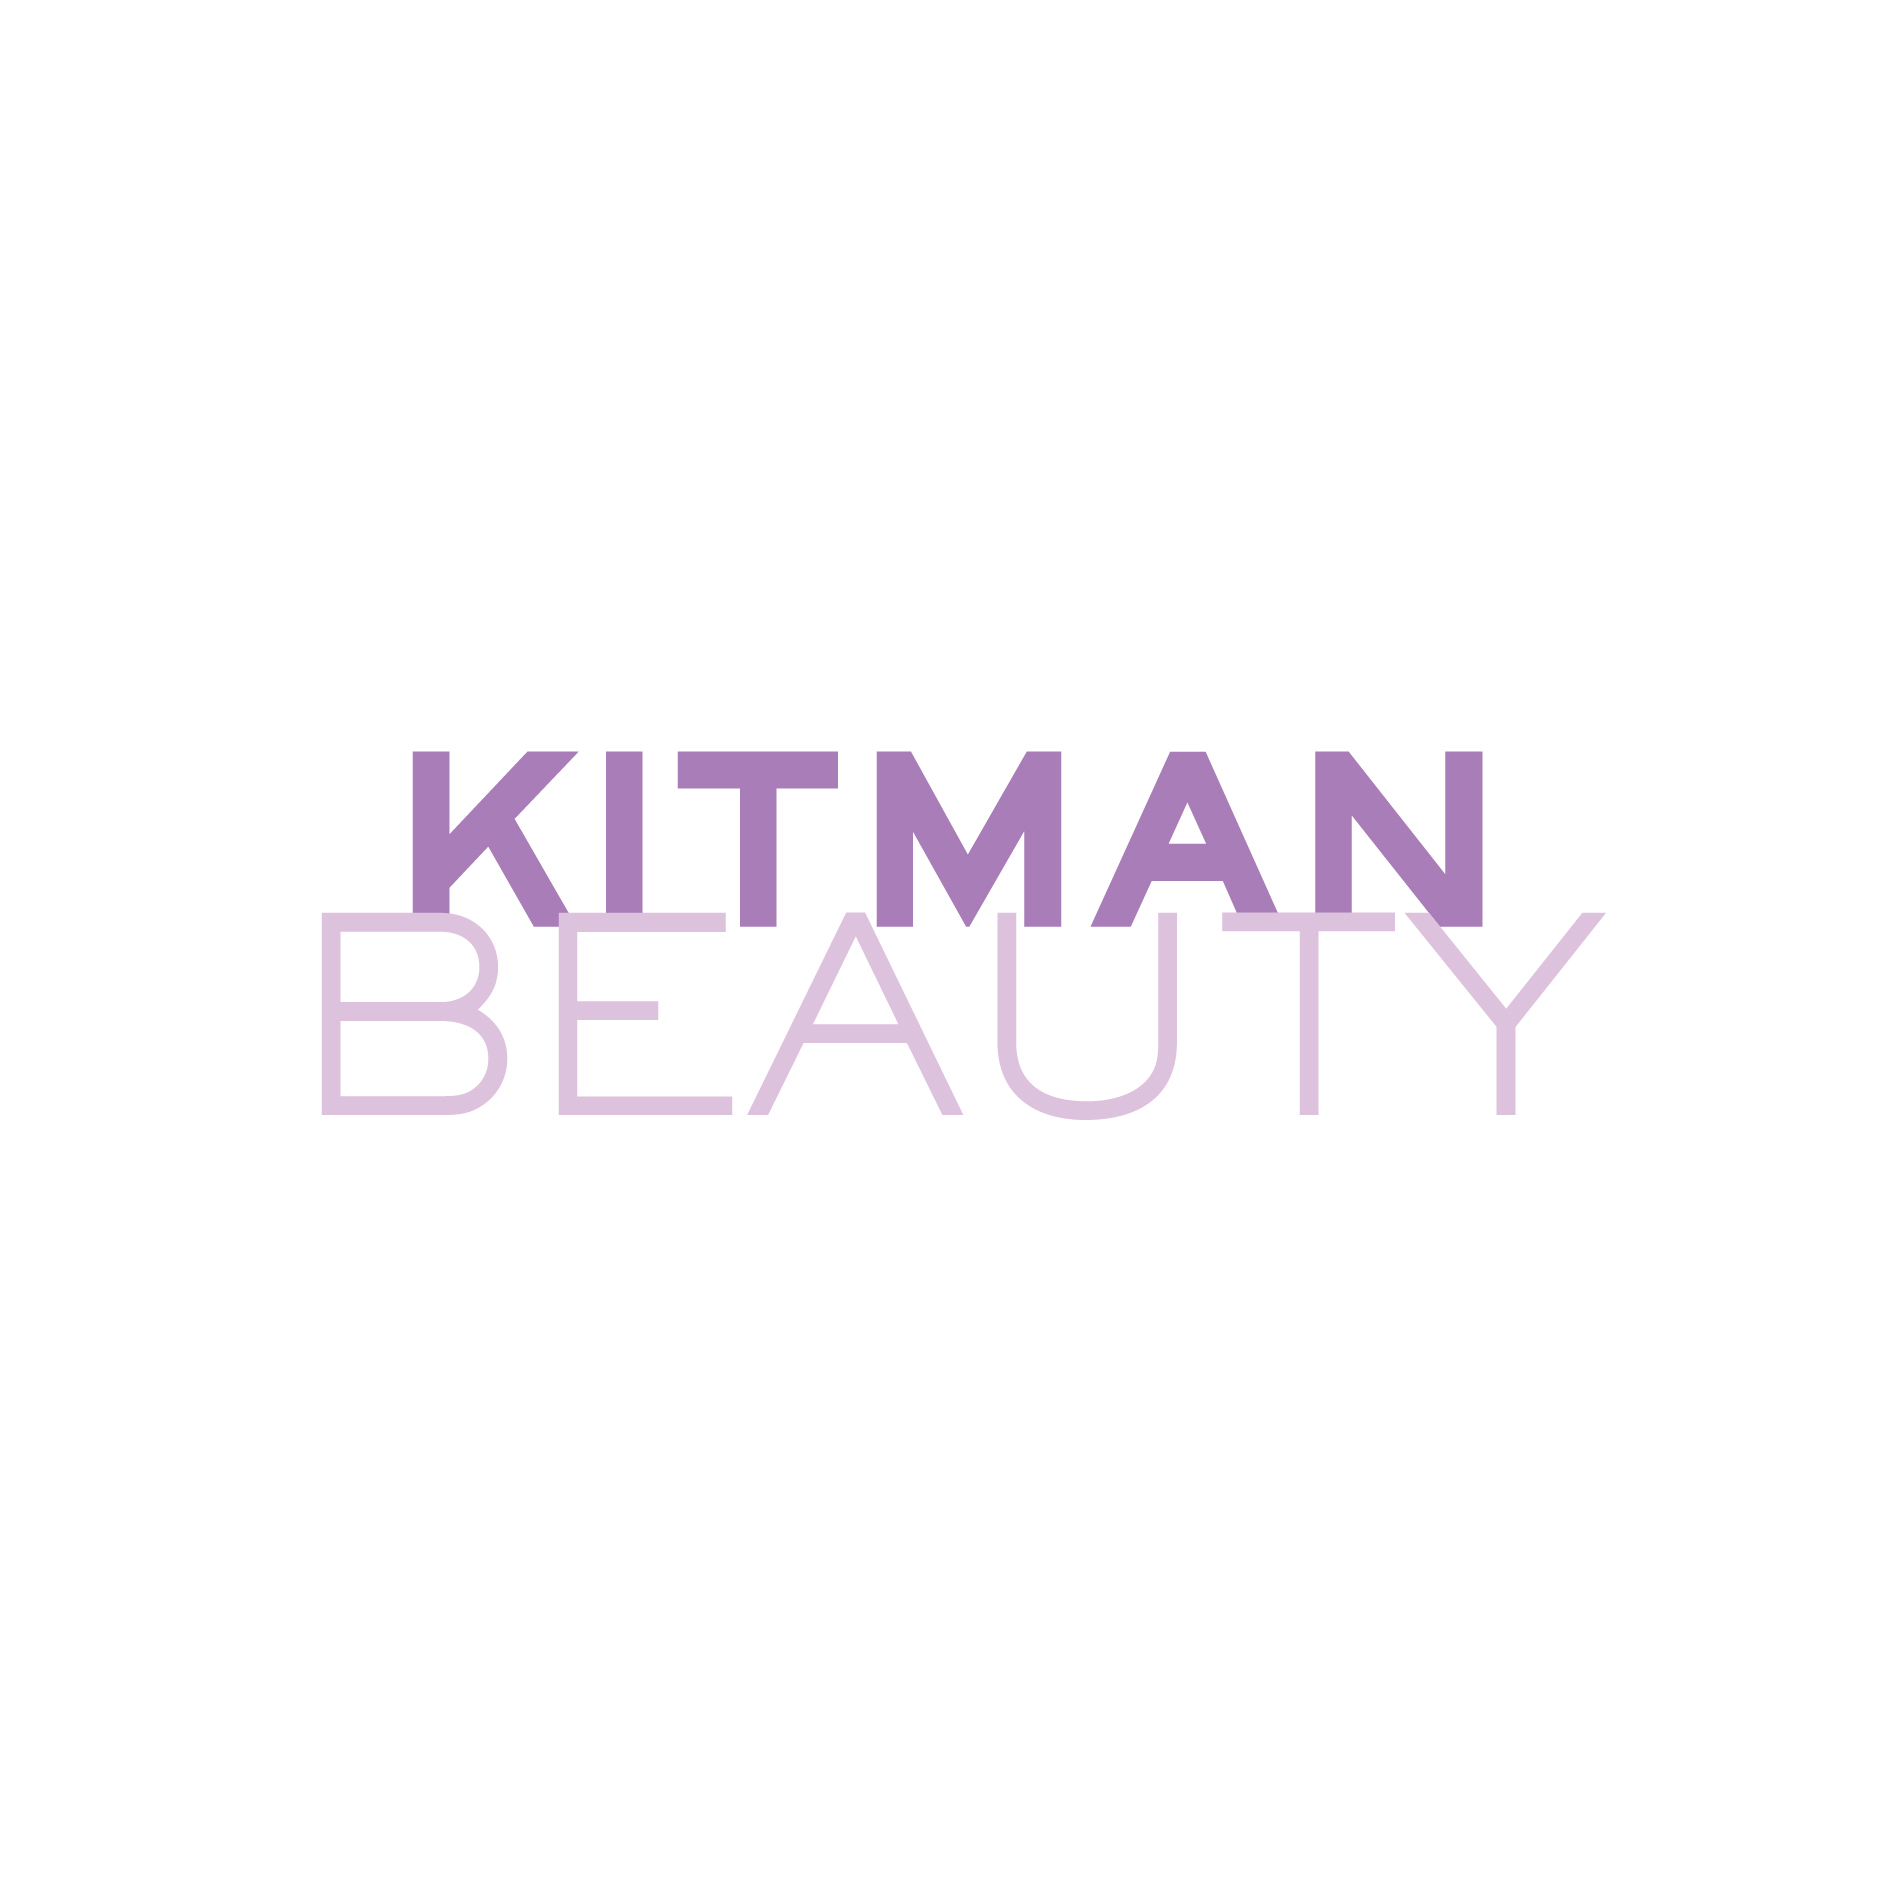 kitman-beauty-logo-02